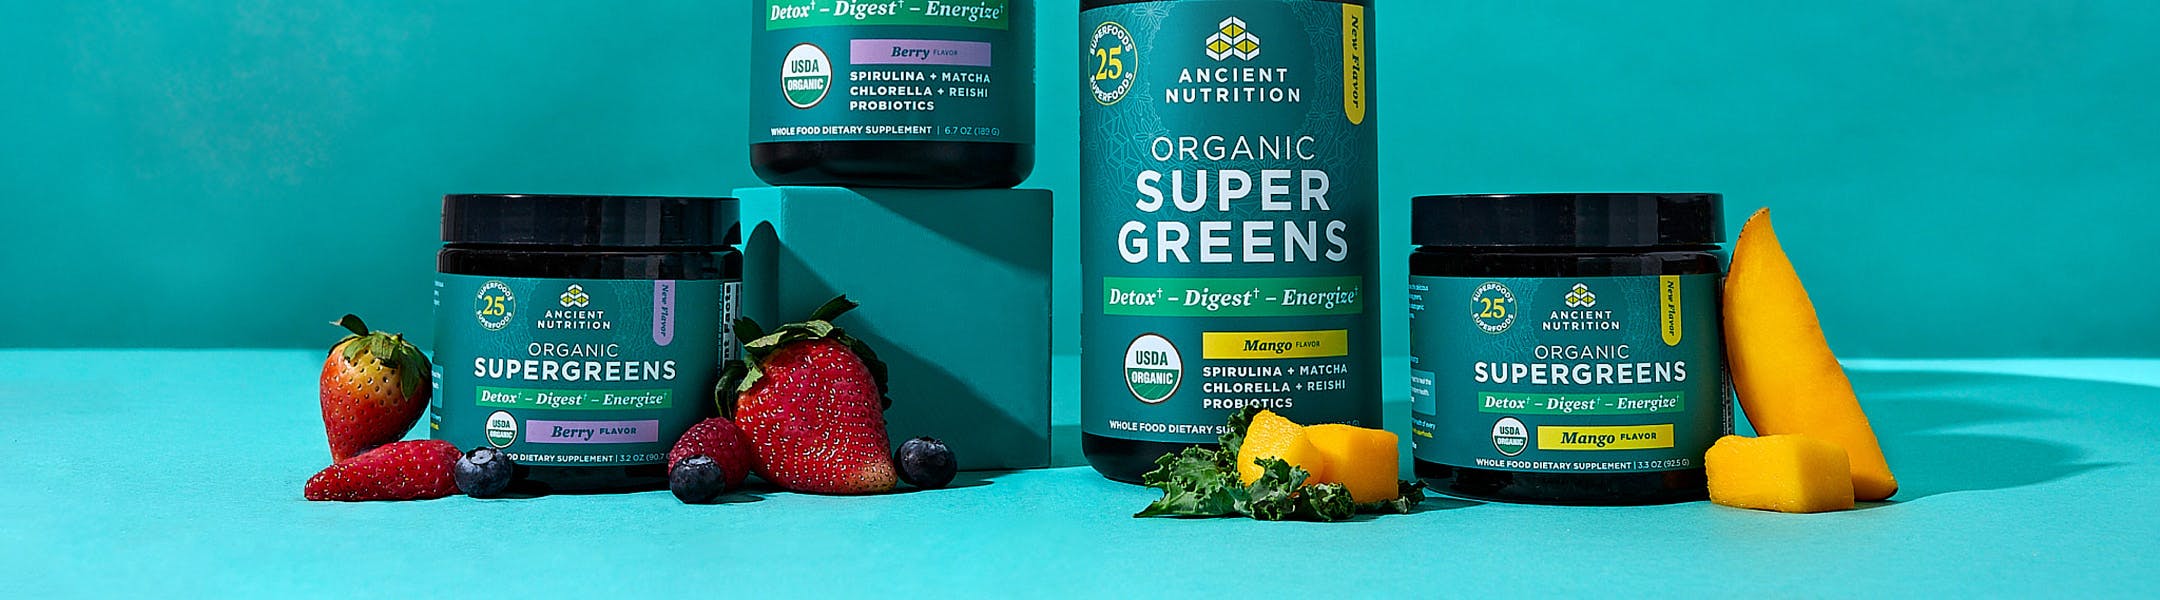 organic supergreens mango and berry